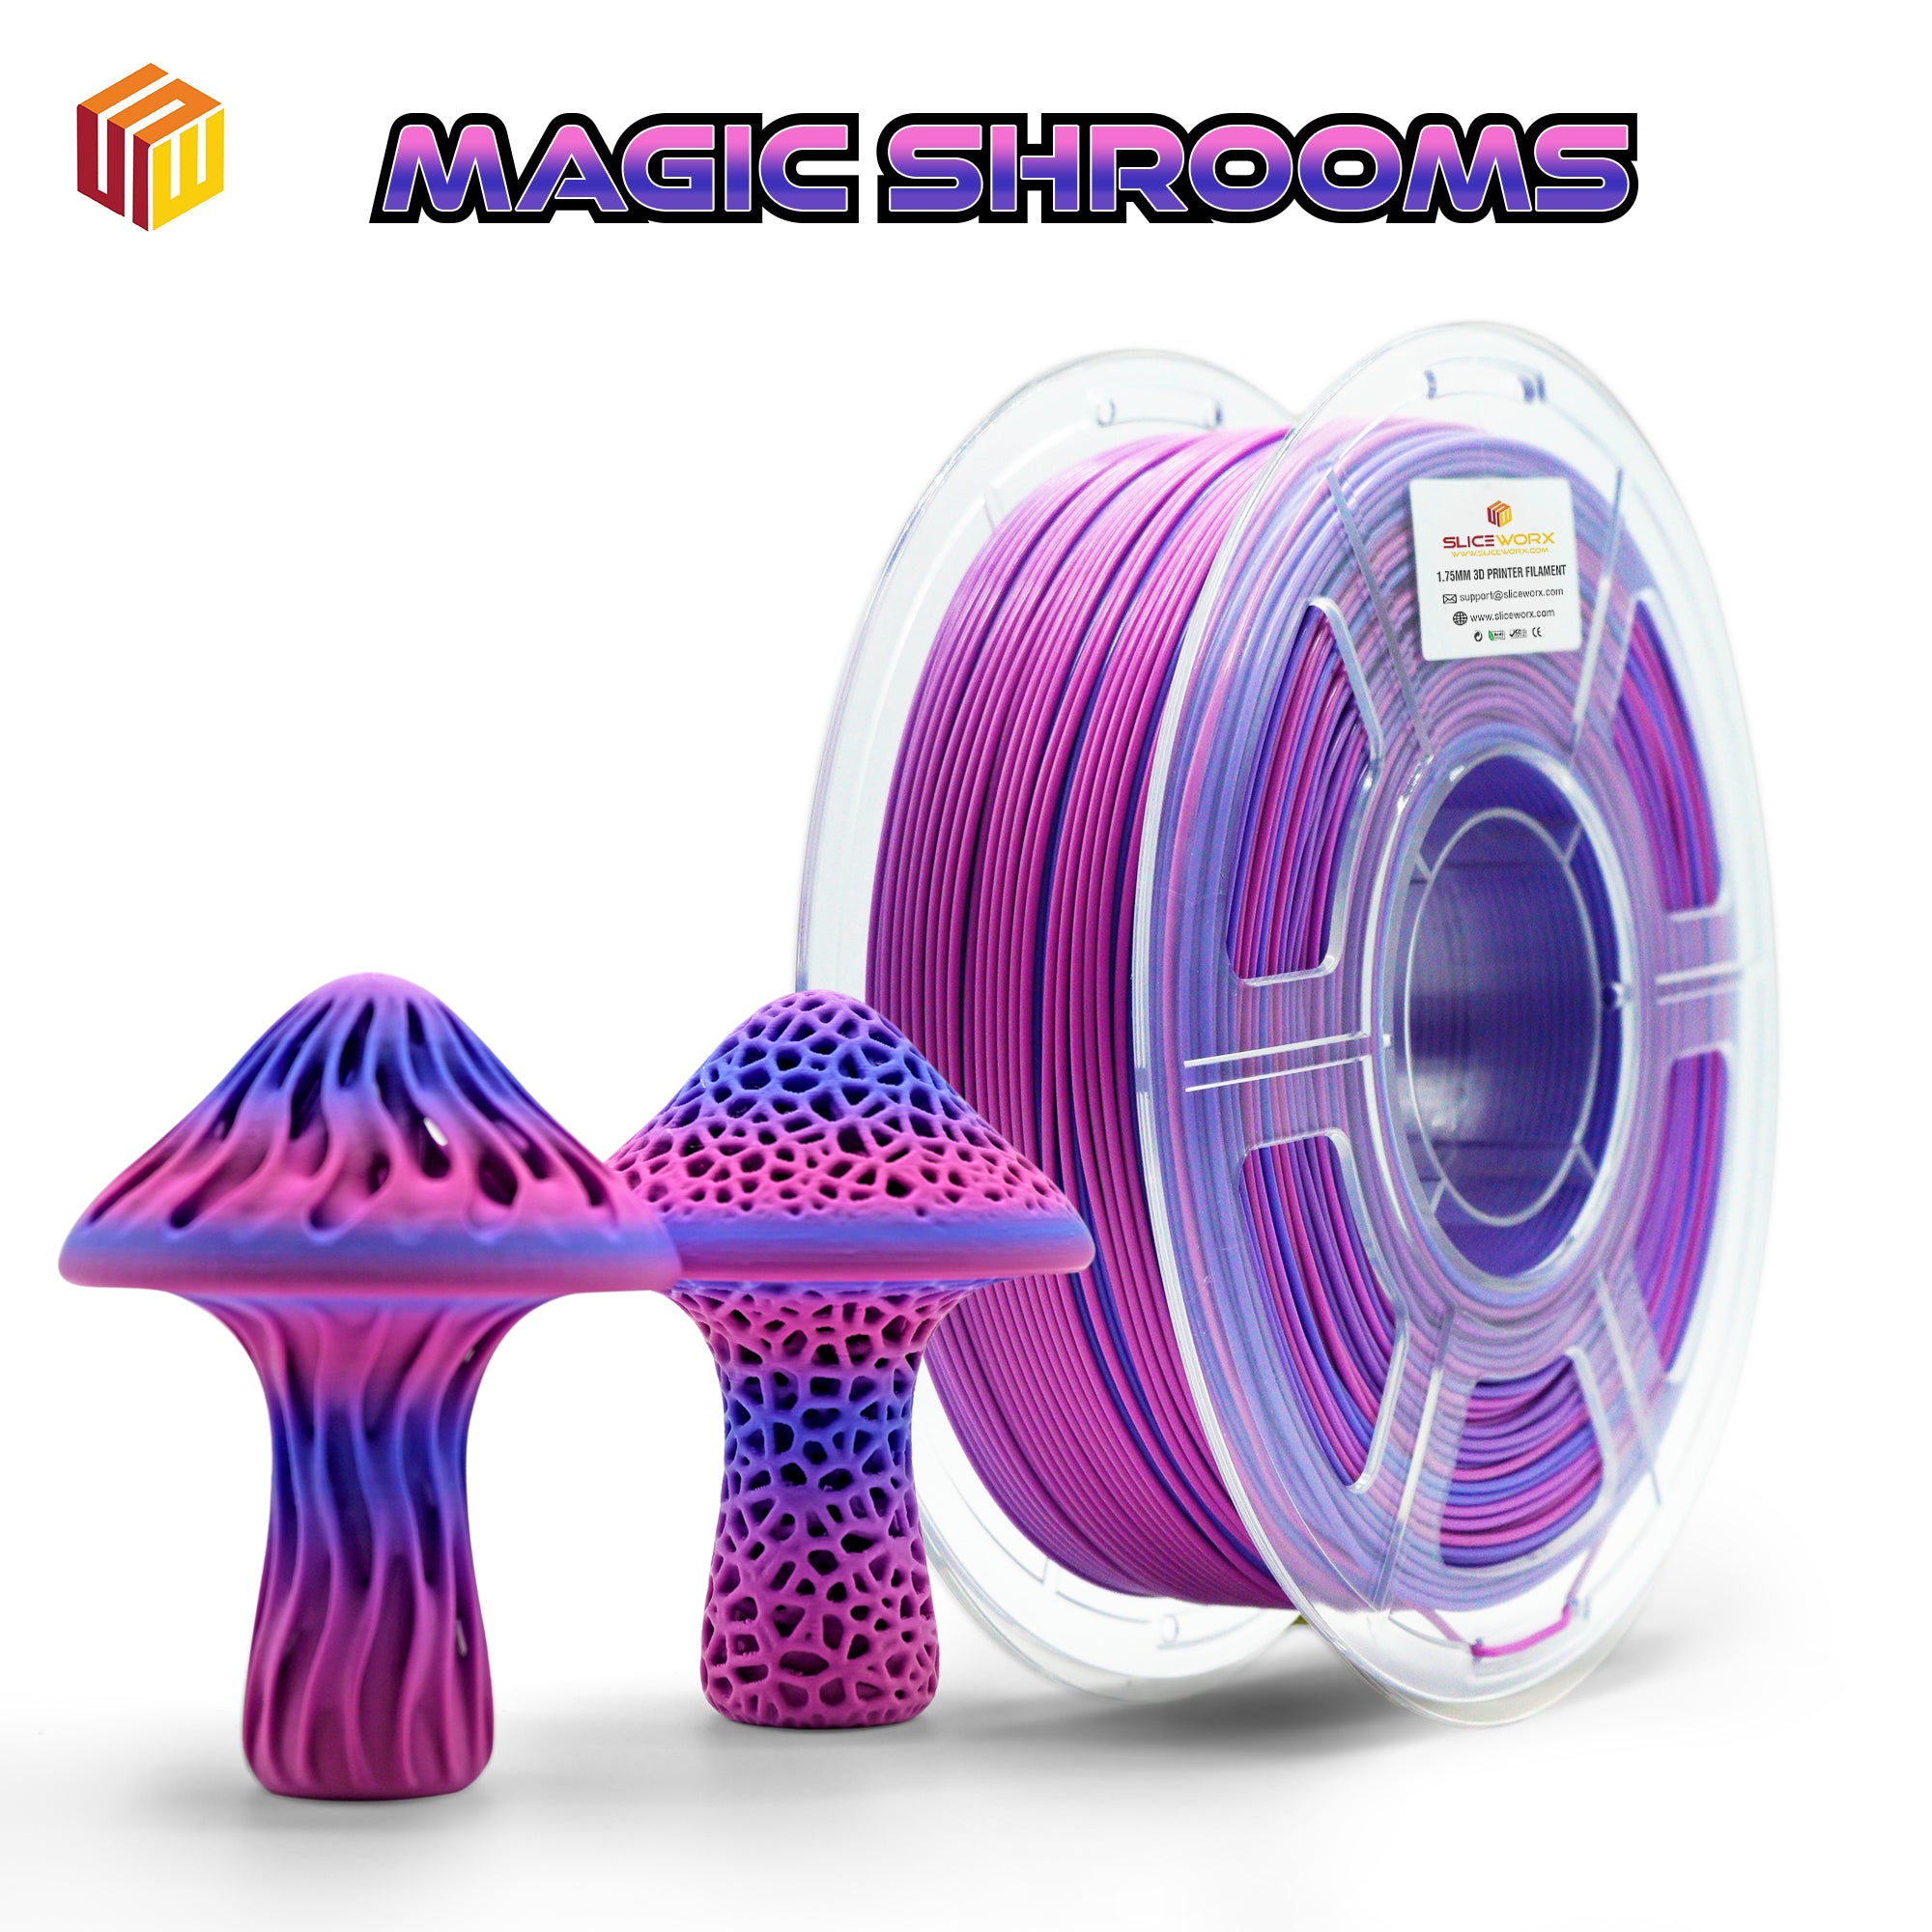 Stretch Magic Purple Sparkle, 1mmx5M Spool #SM10SSP5